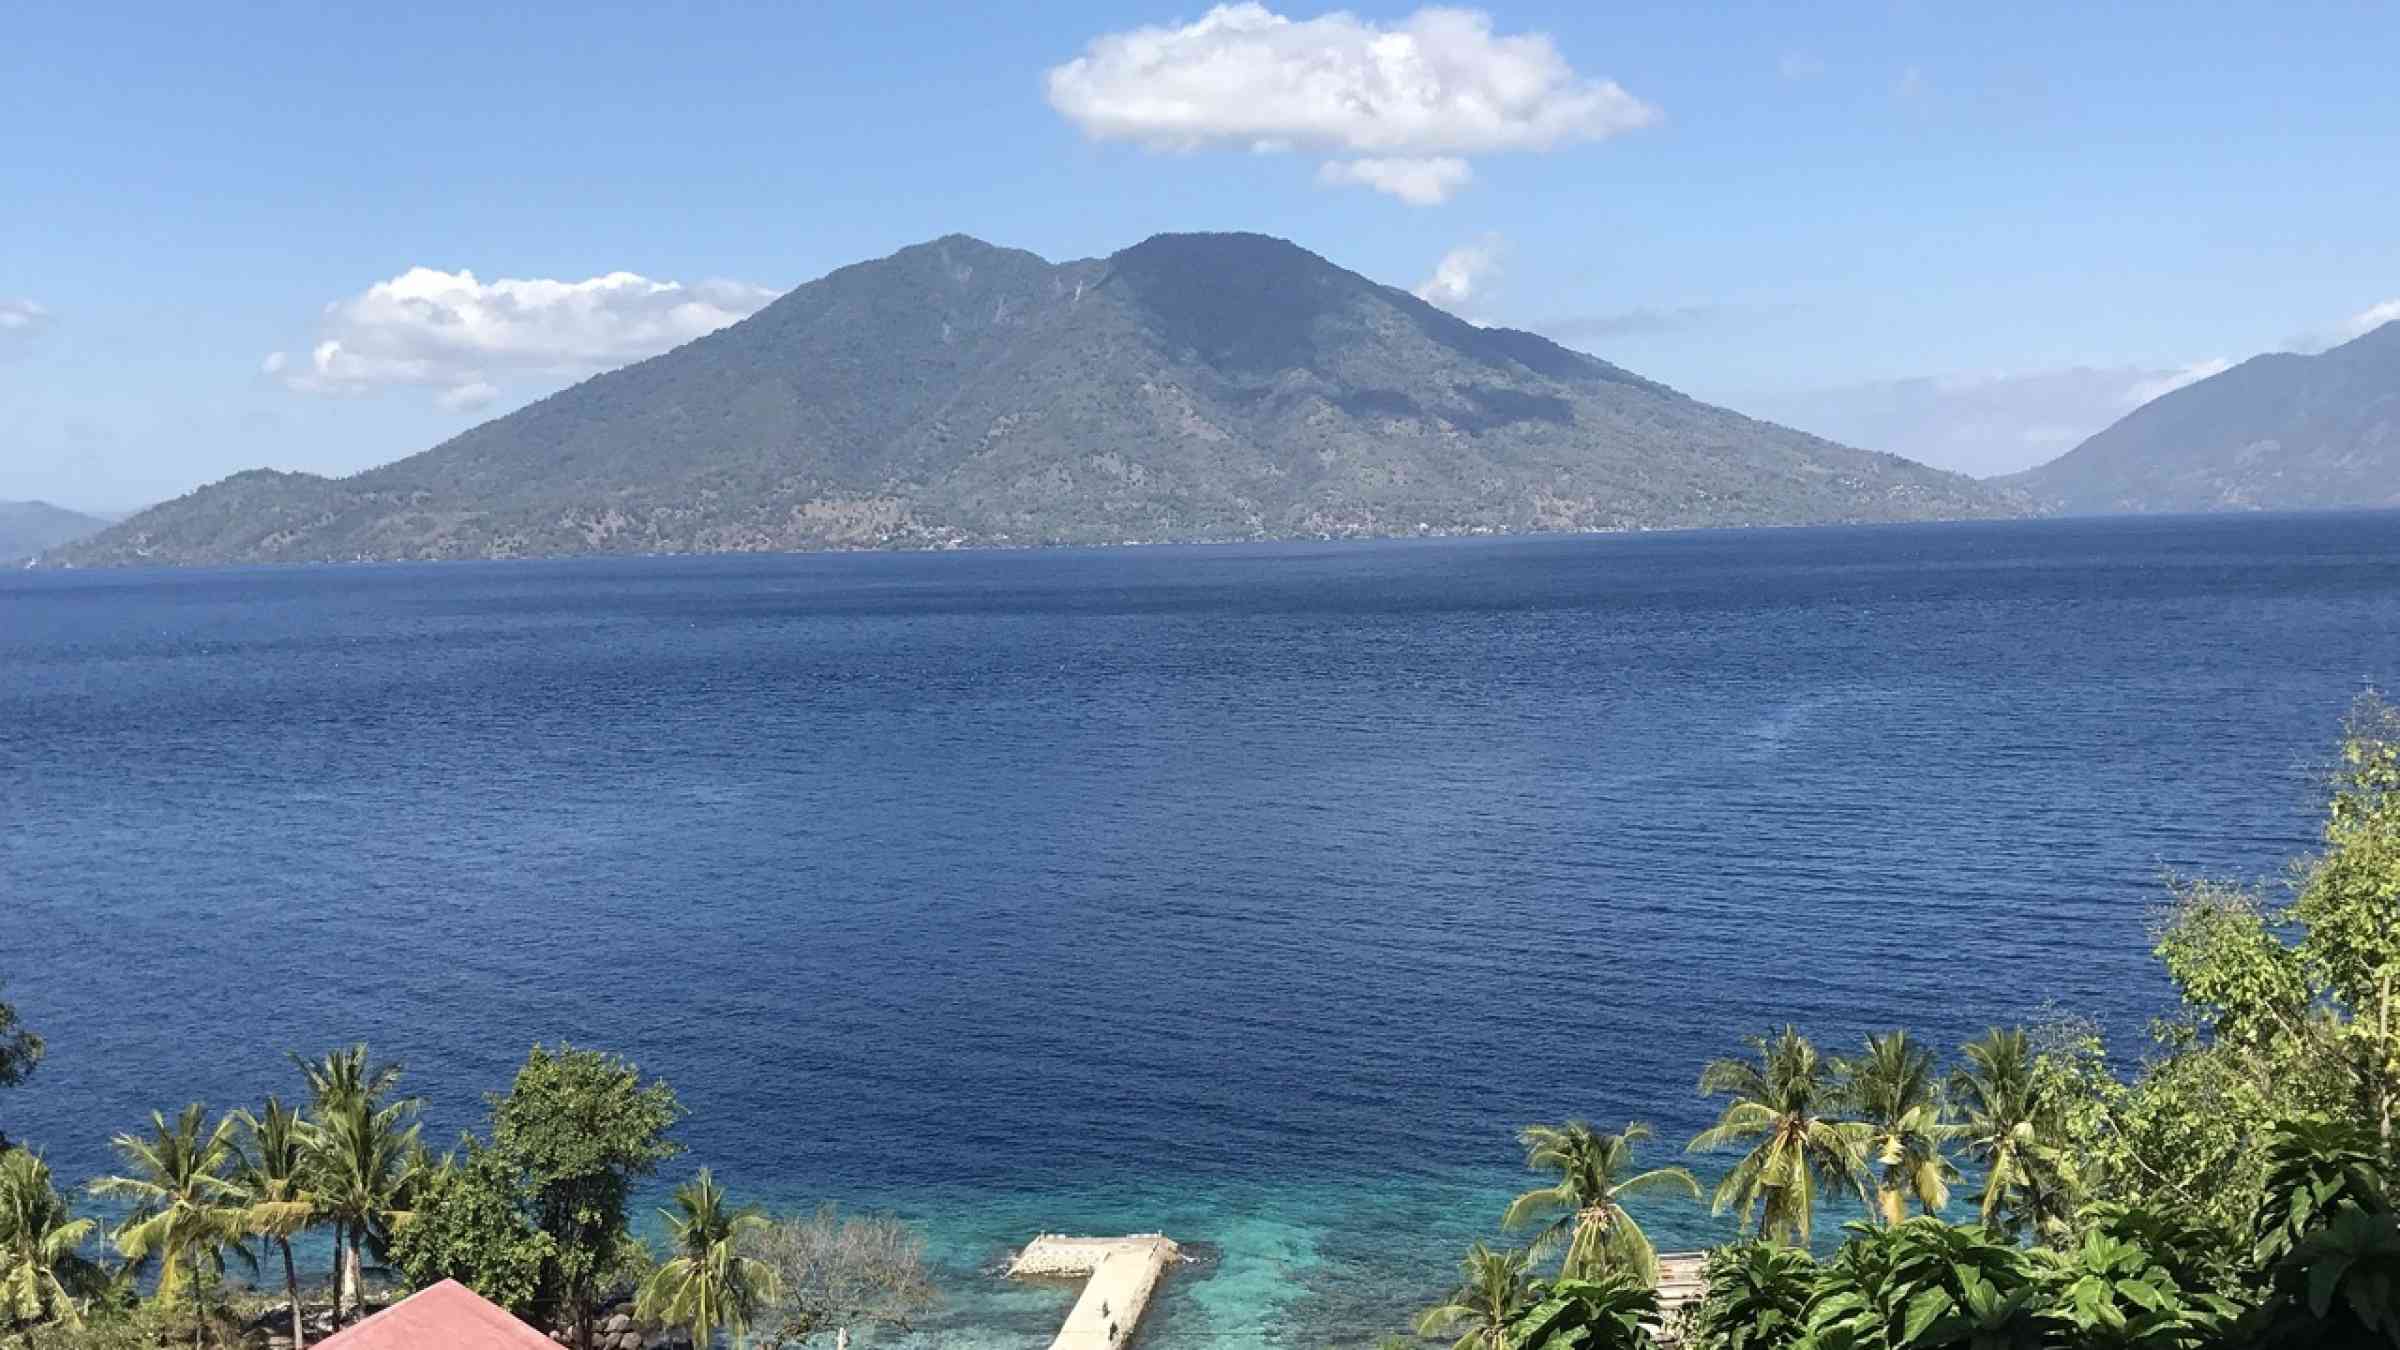 The Maluku Sea area and Ternate Island in the background.